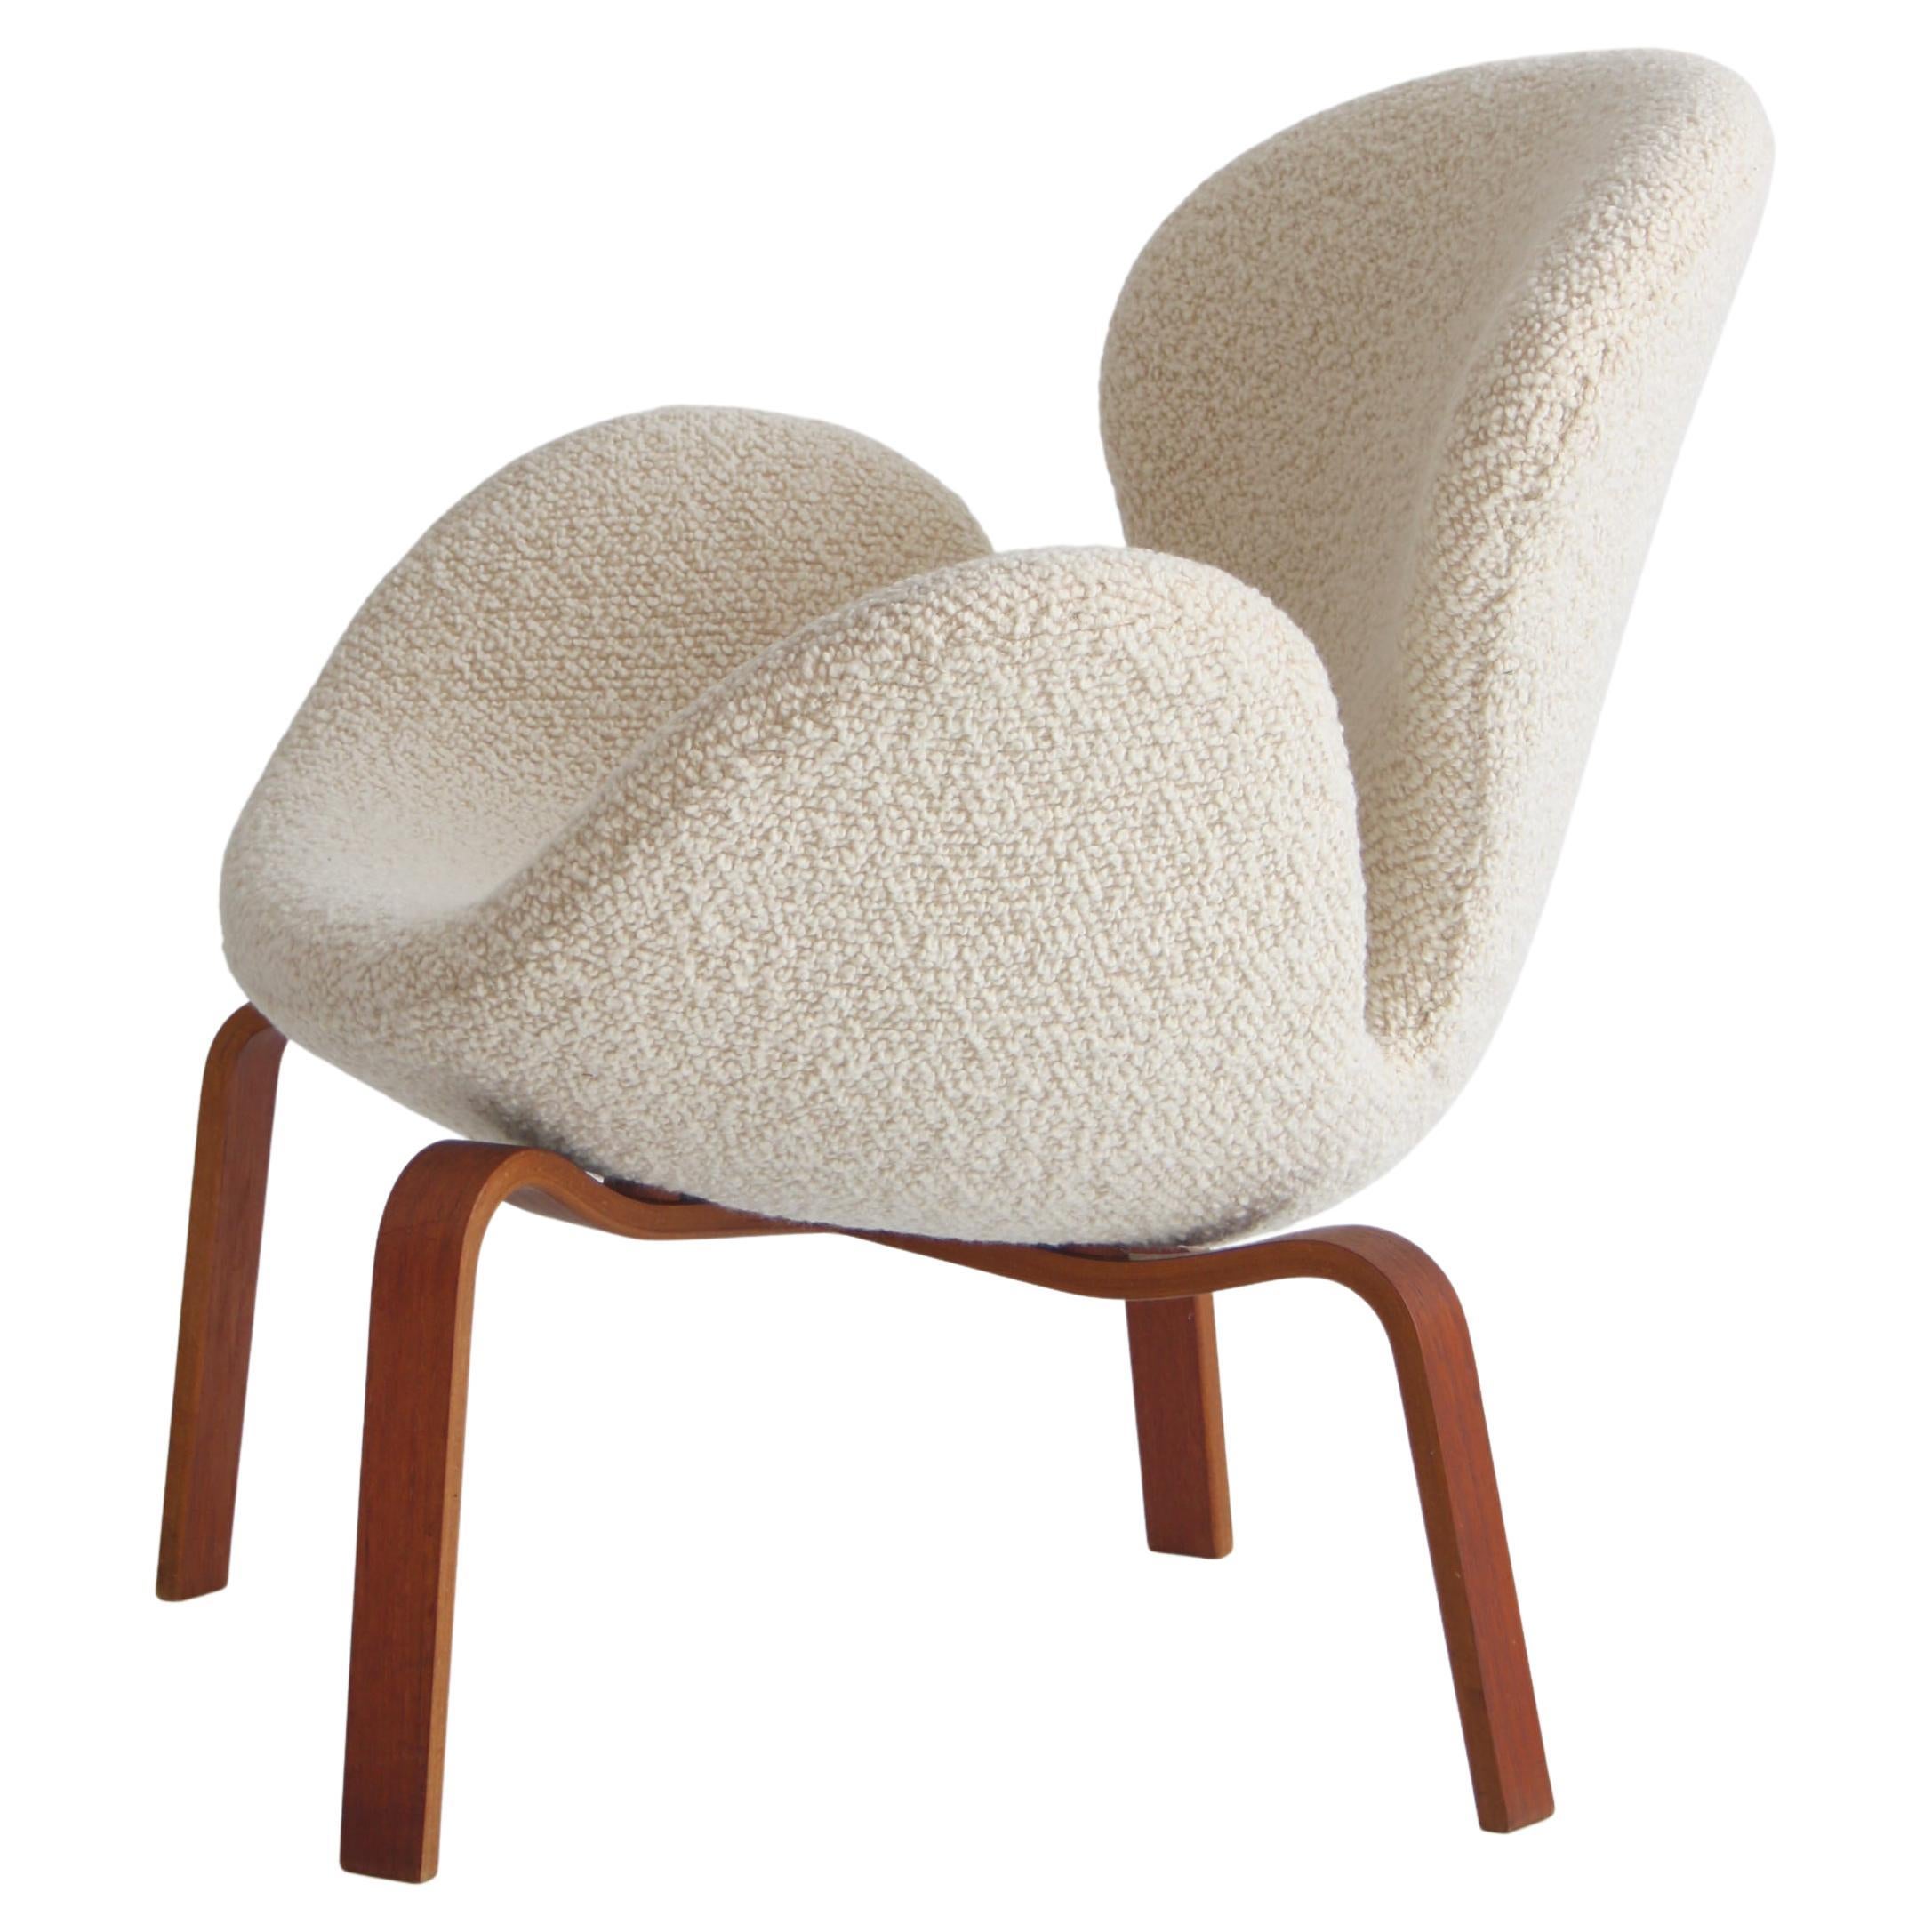 Arne Jacobsen "The Swan" Lounge Chair in Teak & White Bouclé, Fritz Hansen, 1960